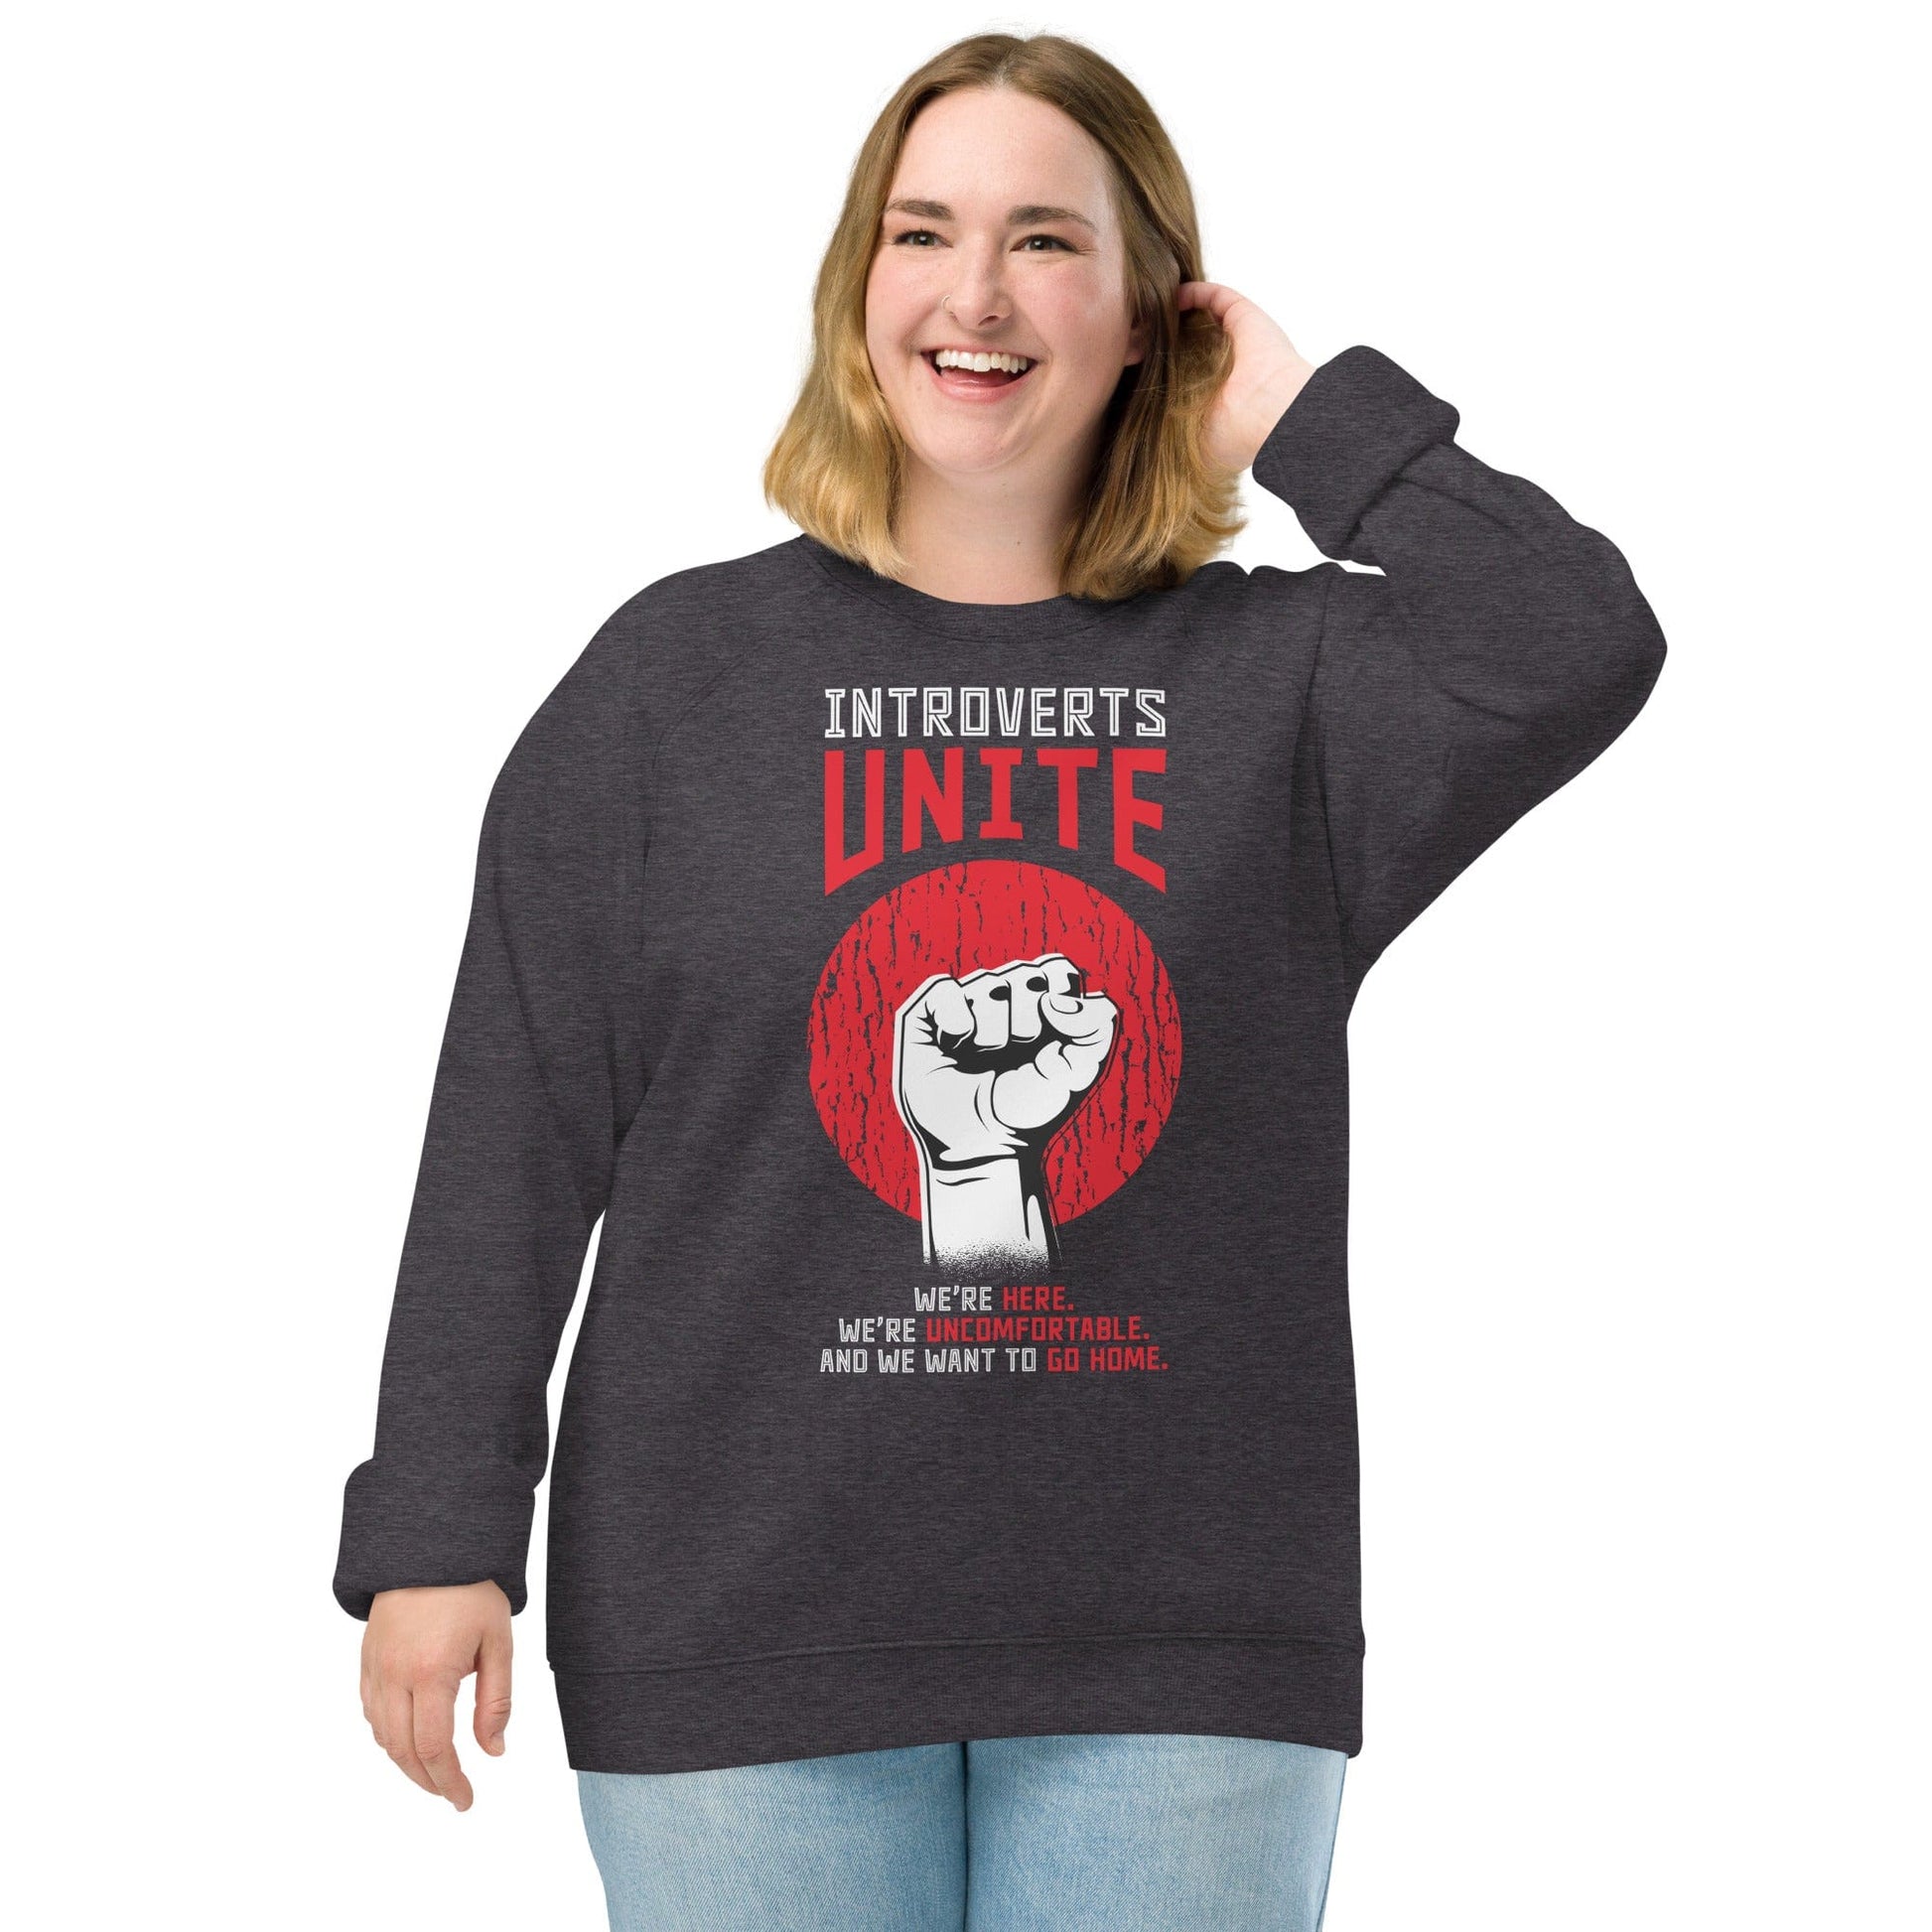 Introverts unite! - Eco Sweatshirt